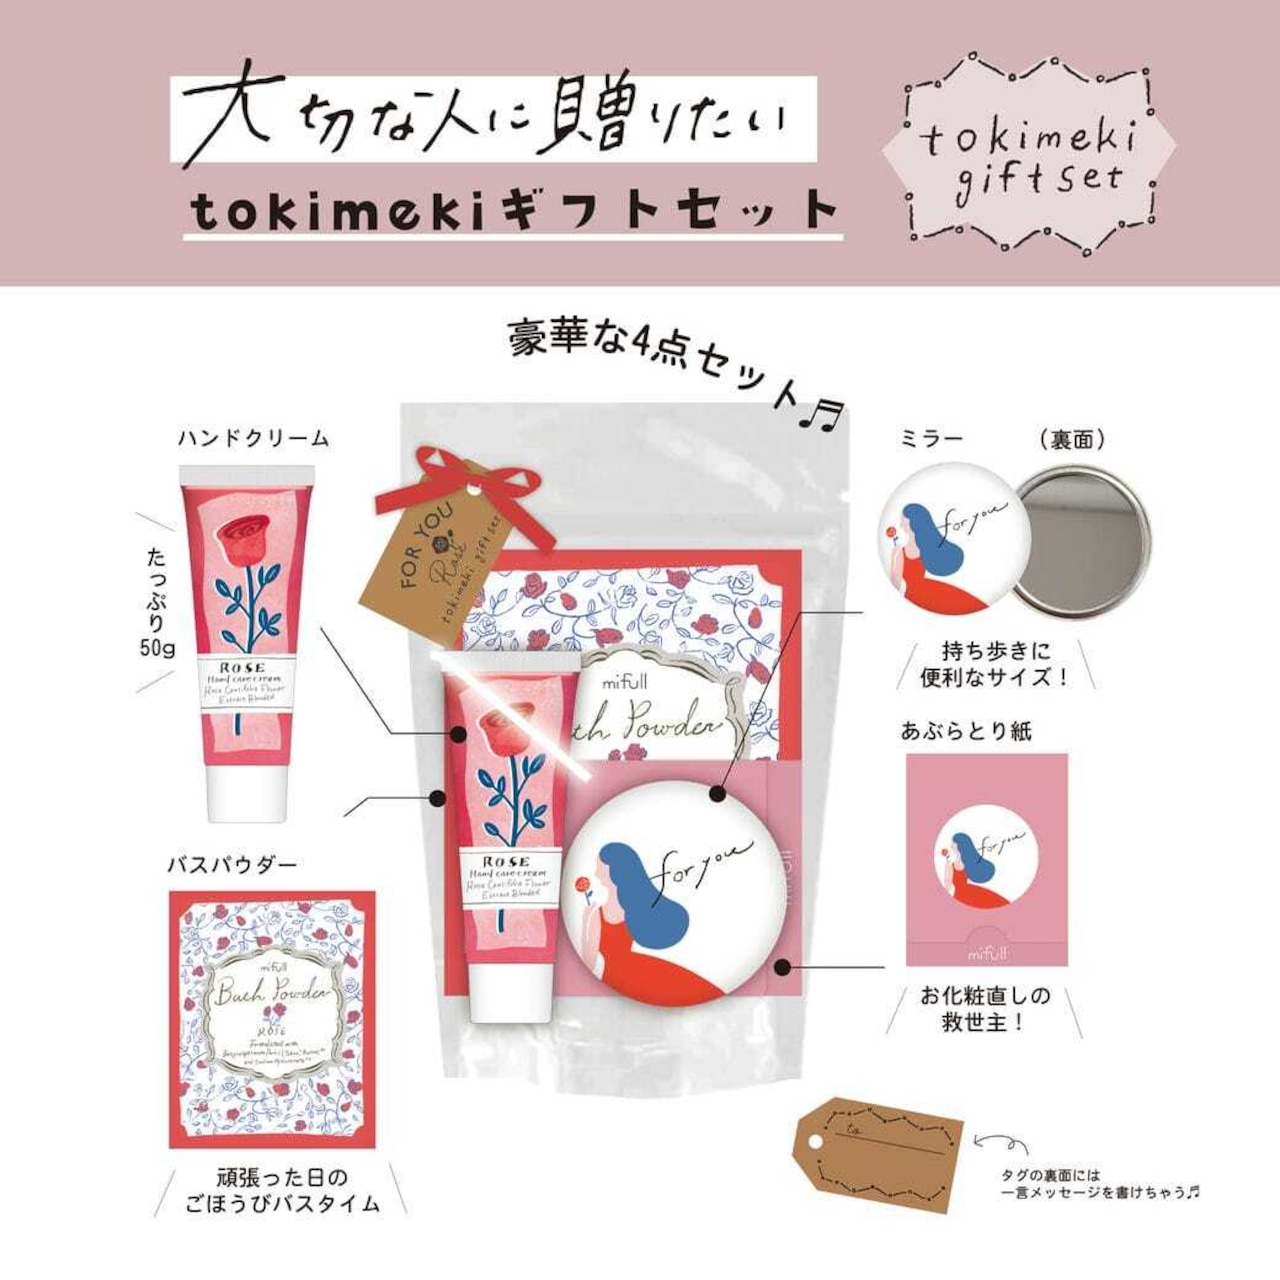 【mifull】tokimeki gift set ローズ